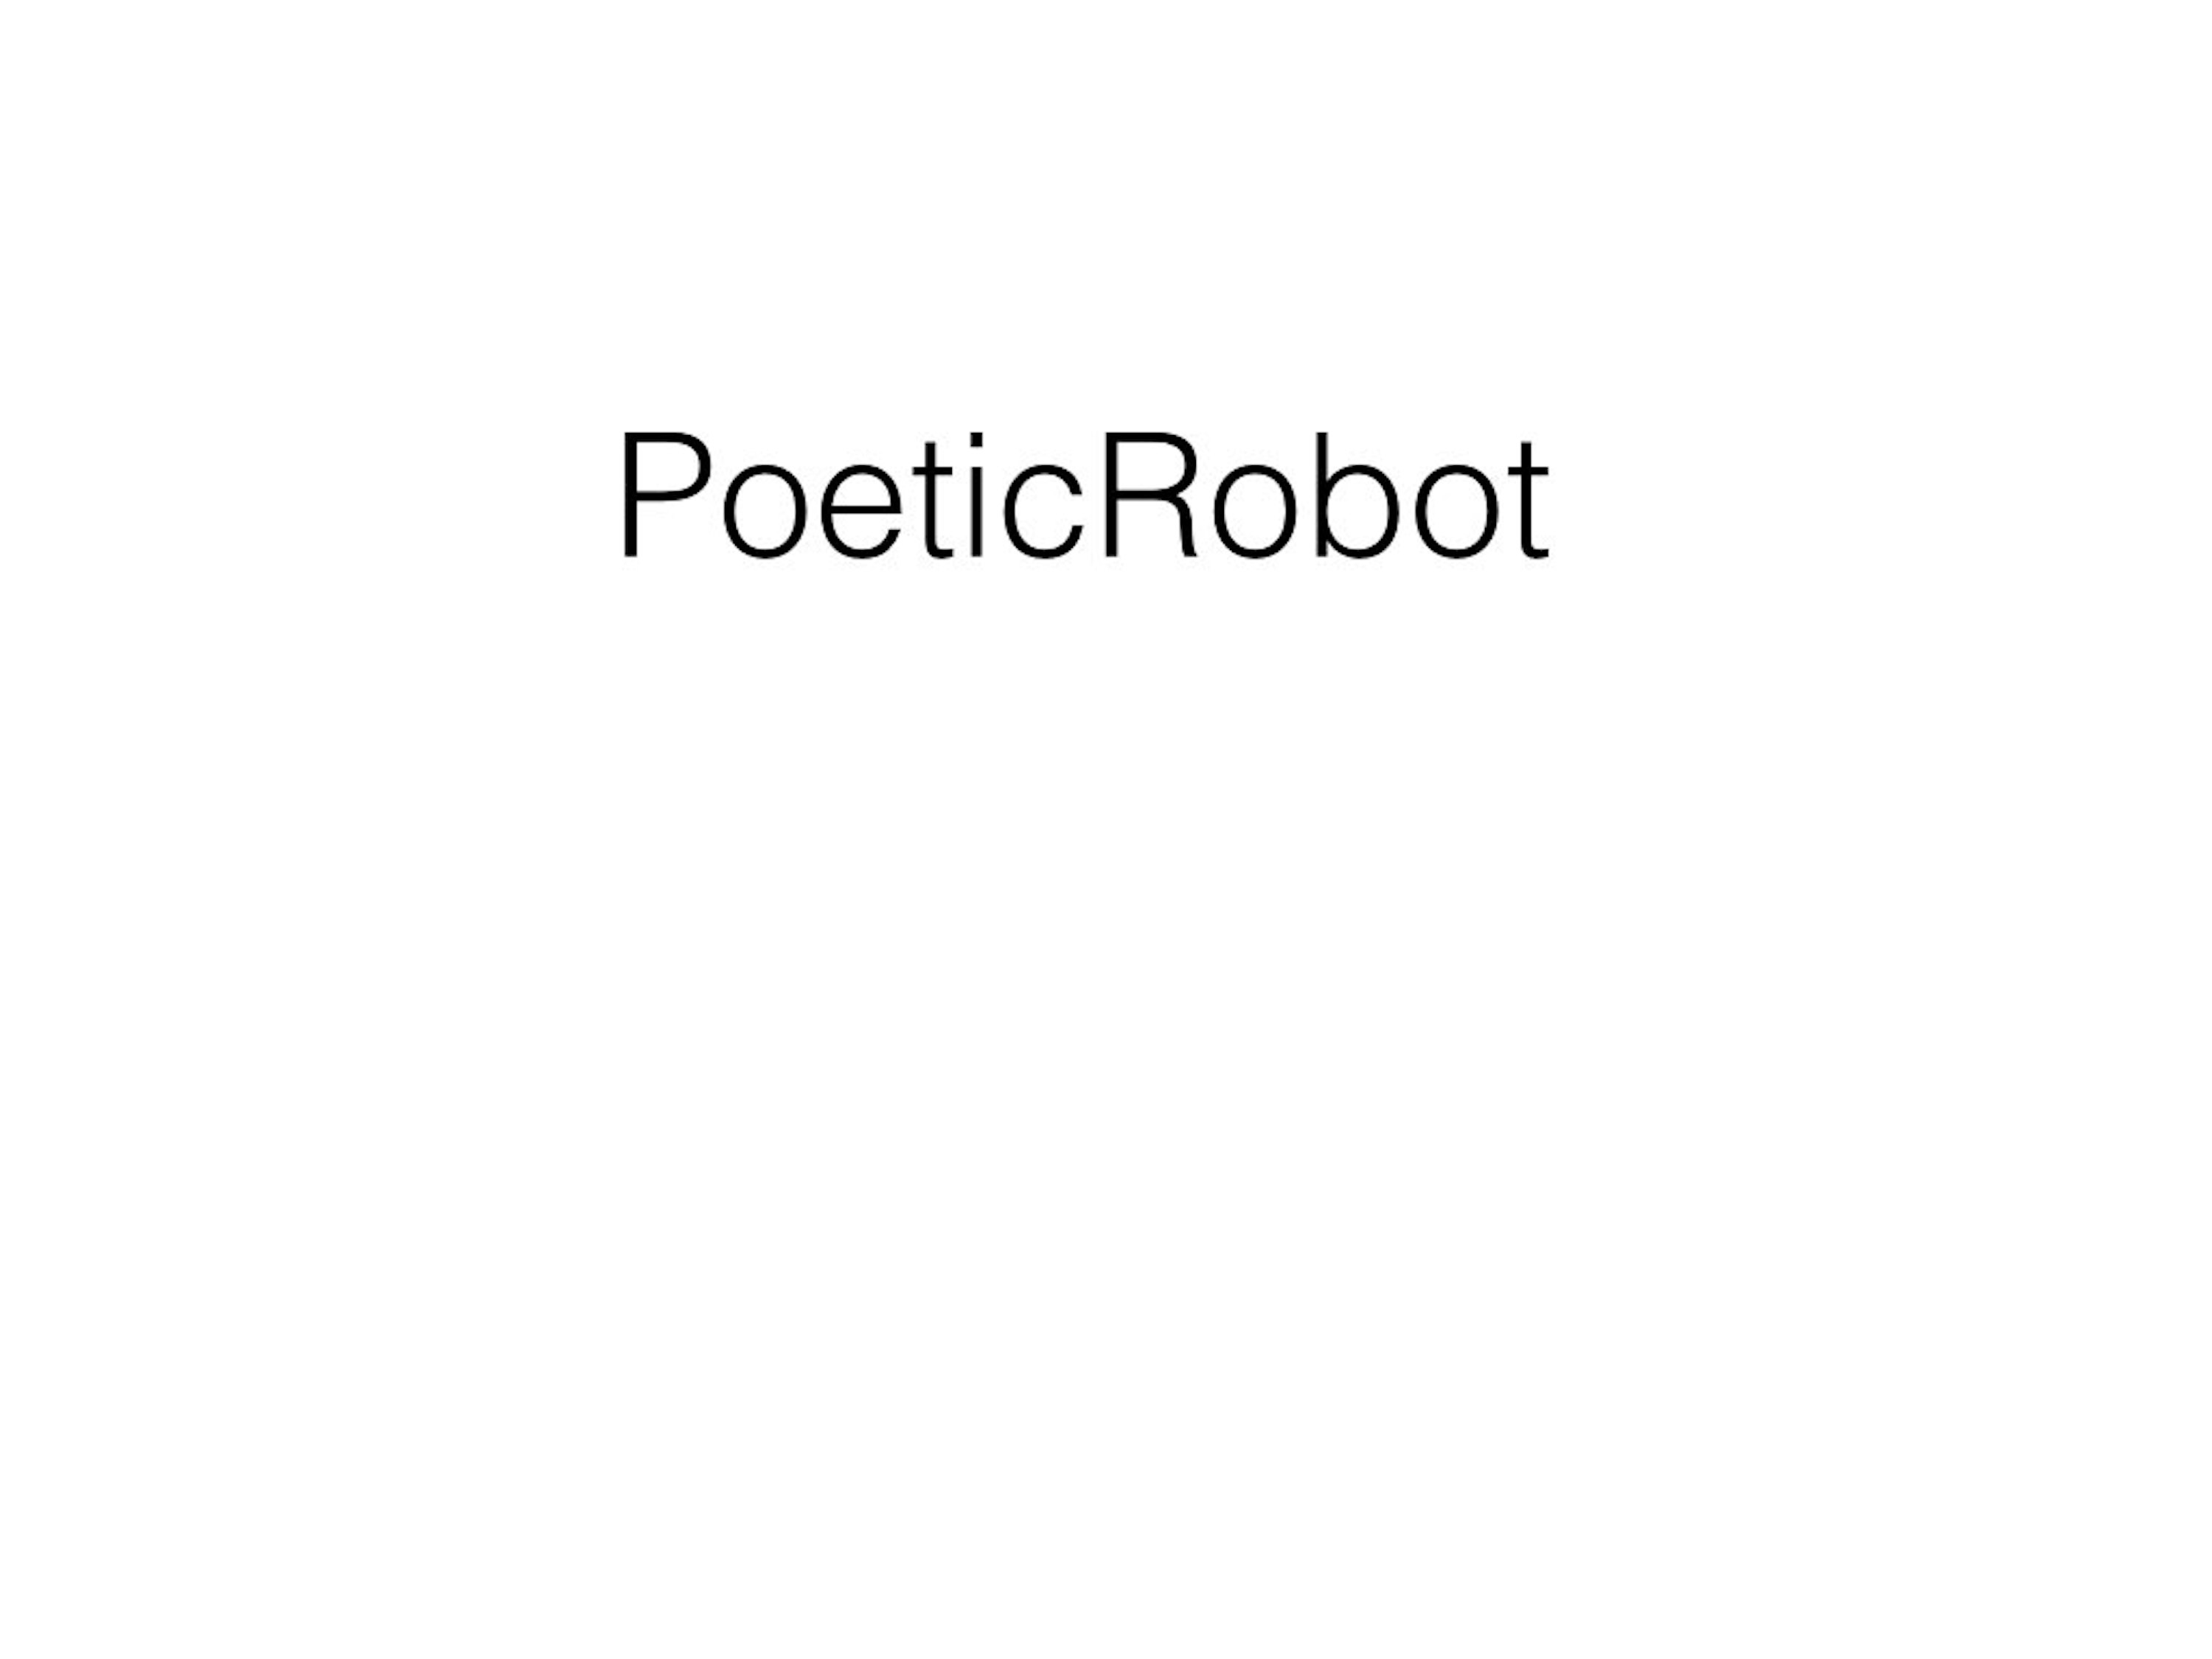 PoeticRobot: Episode 1 Fantastic Four Review